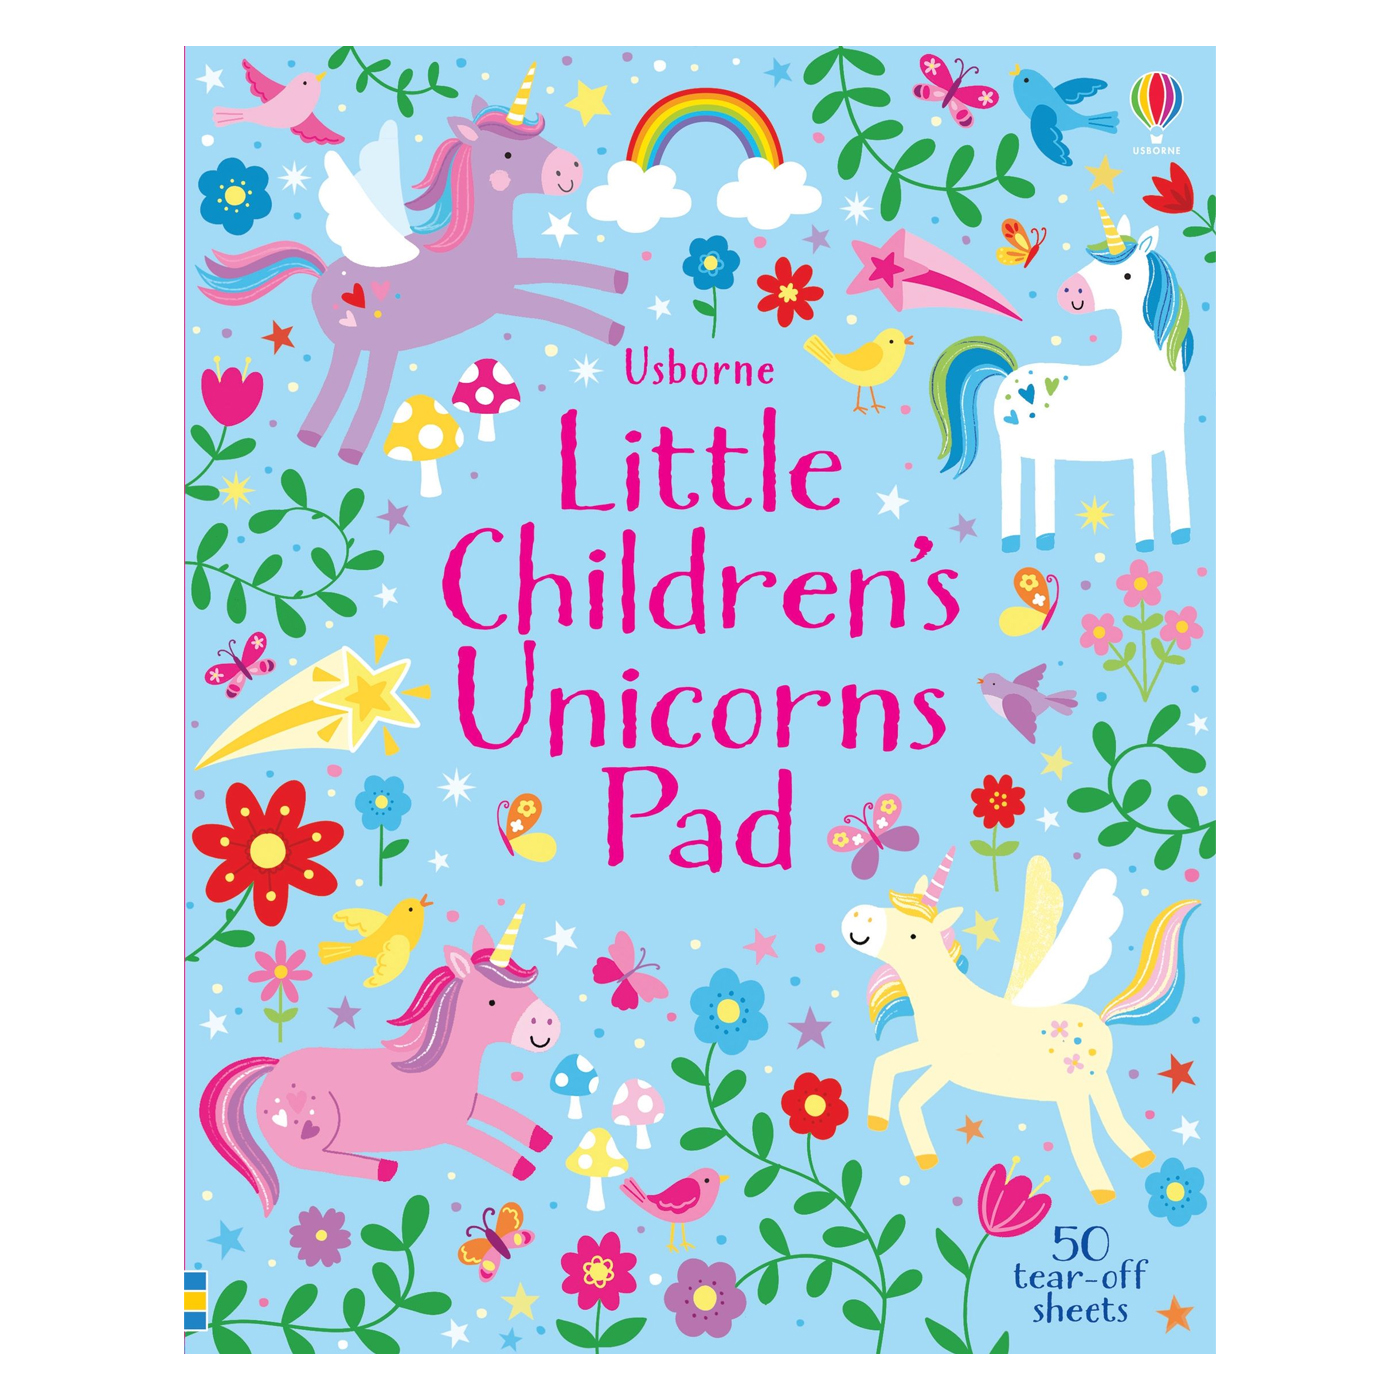  Little Children's Unicorns Pad